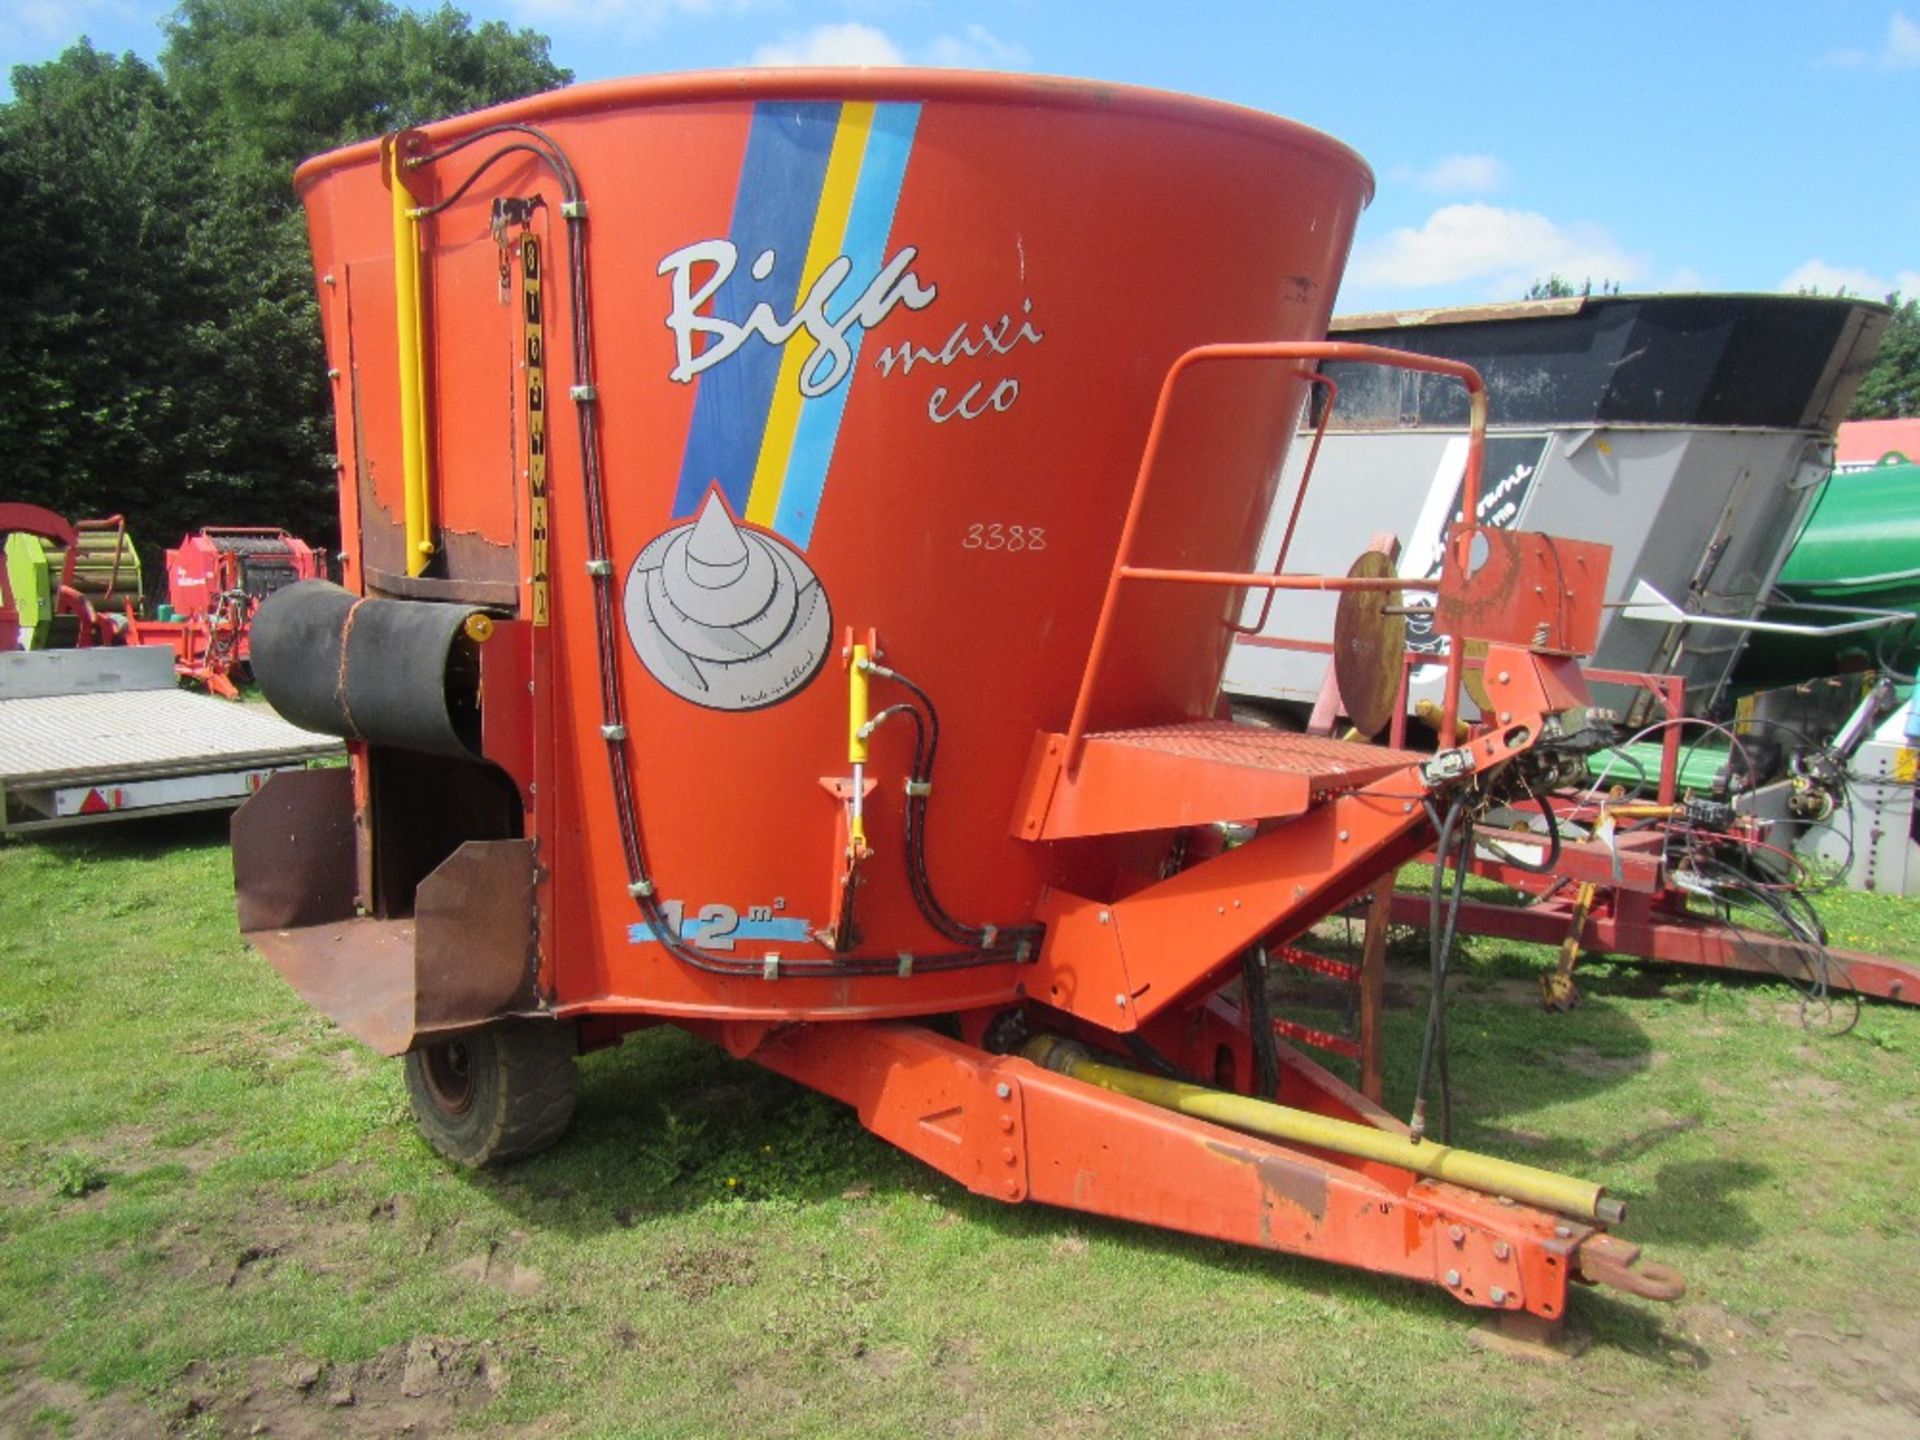 Peecon Biga Mixer Eco Tub Mixer Feed Wagon for Spares or Repairs